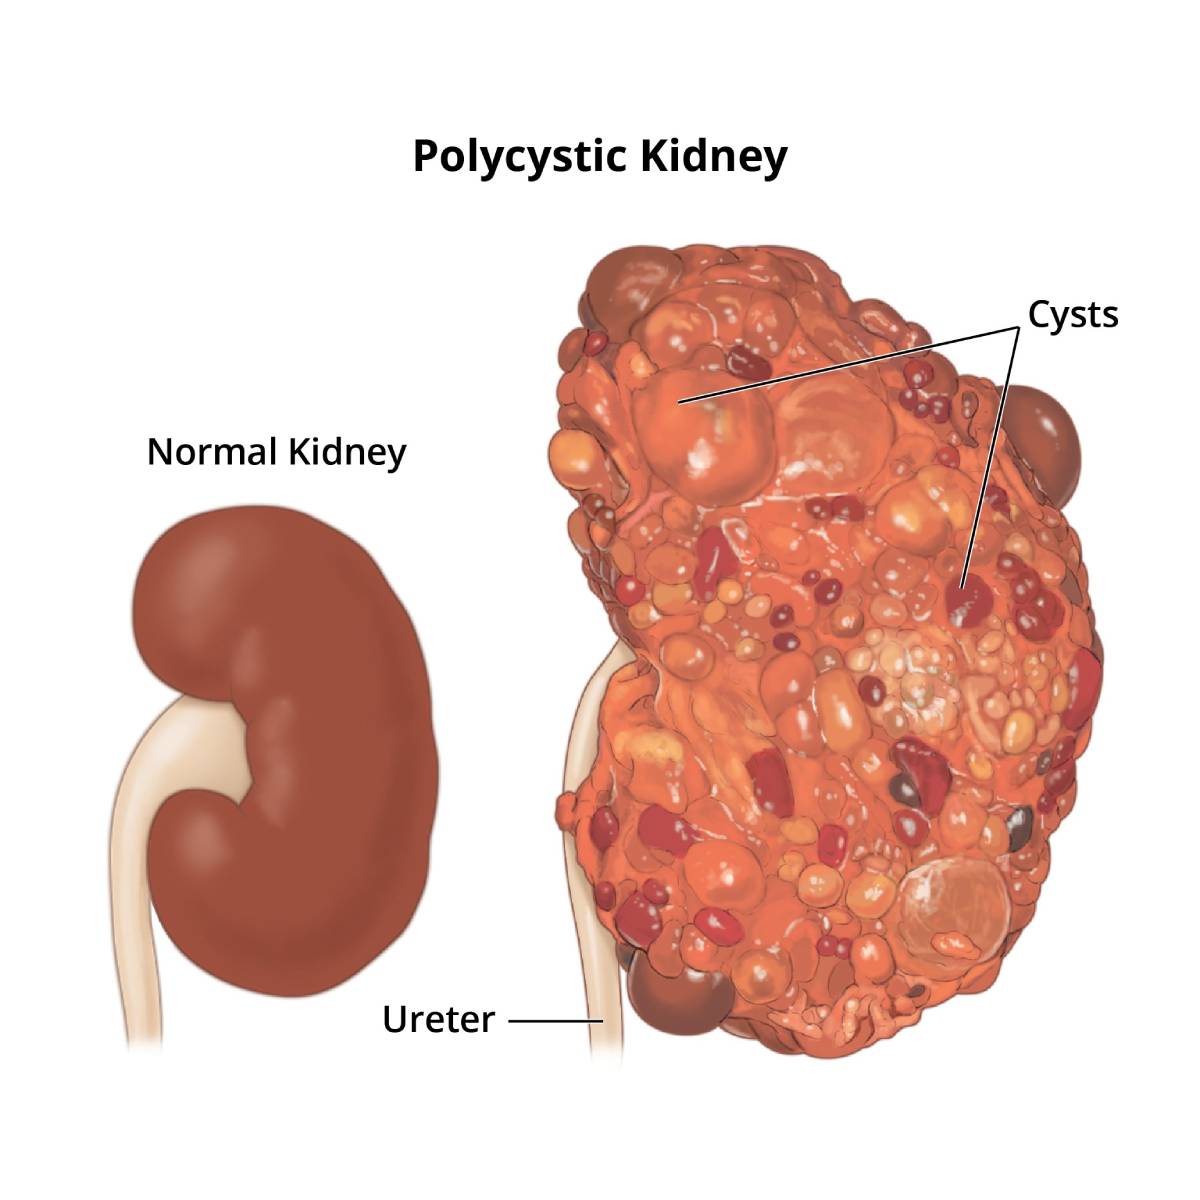 Kidney Disease - Causes, Symptoms, Treatment & Diagnosis